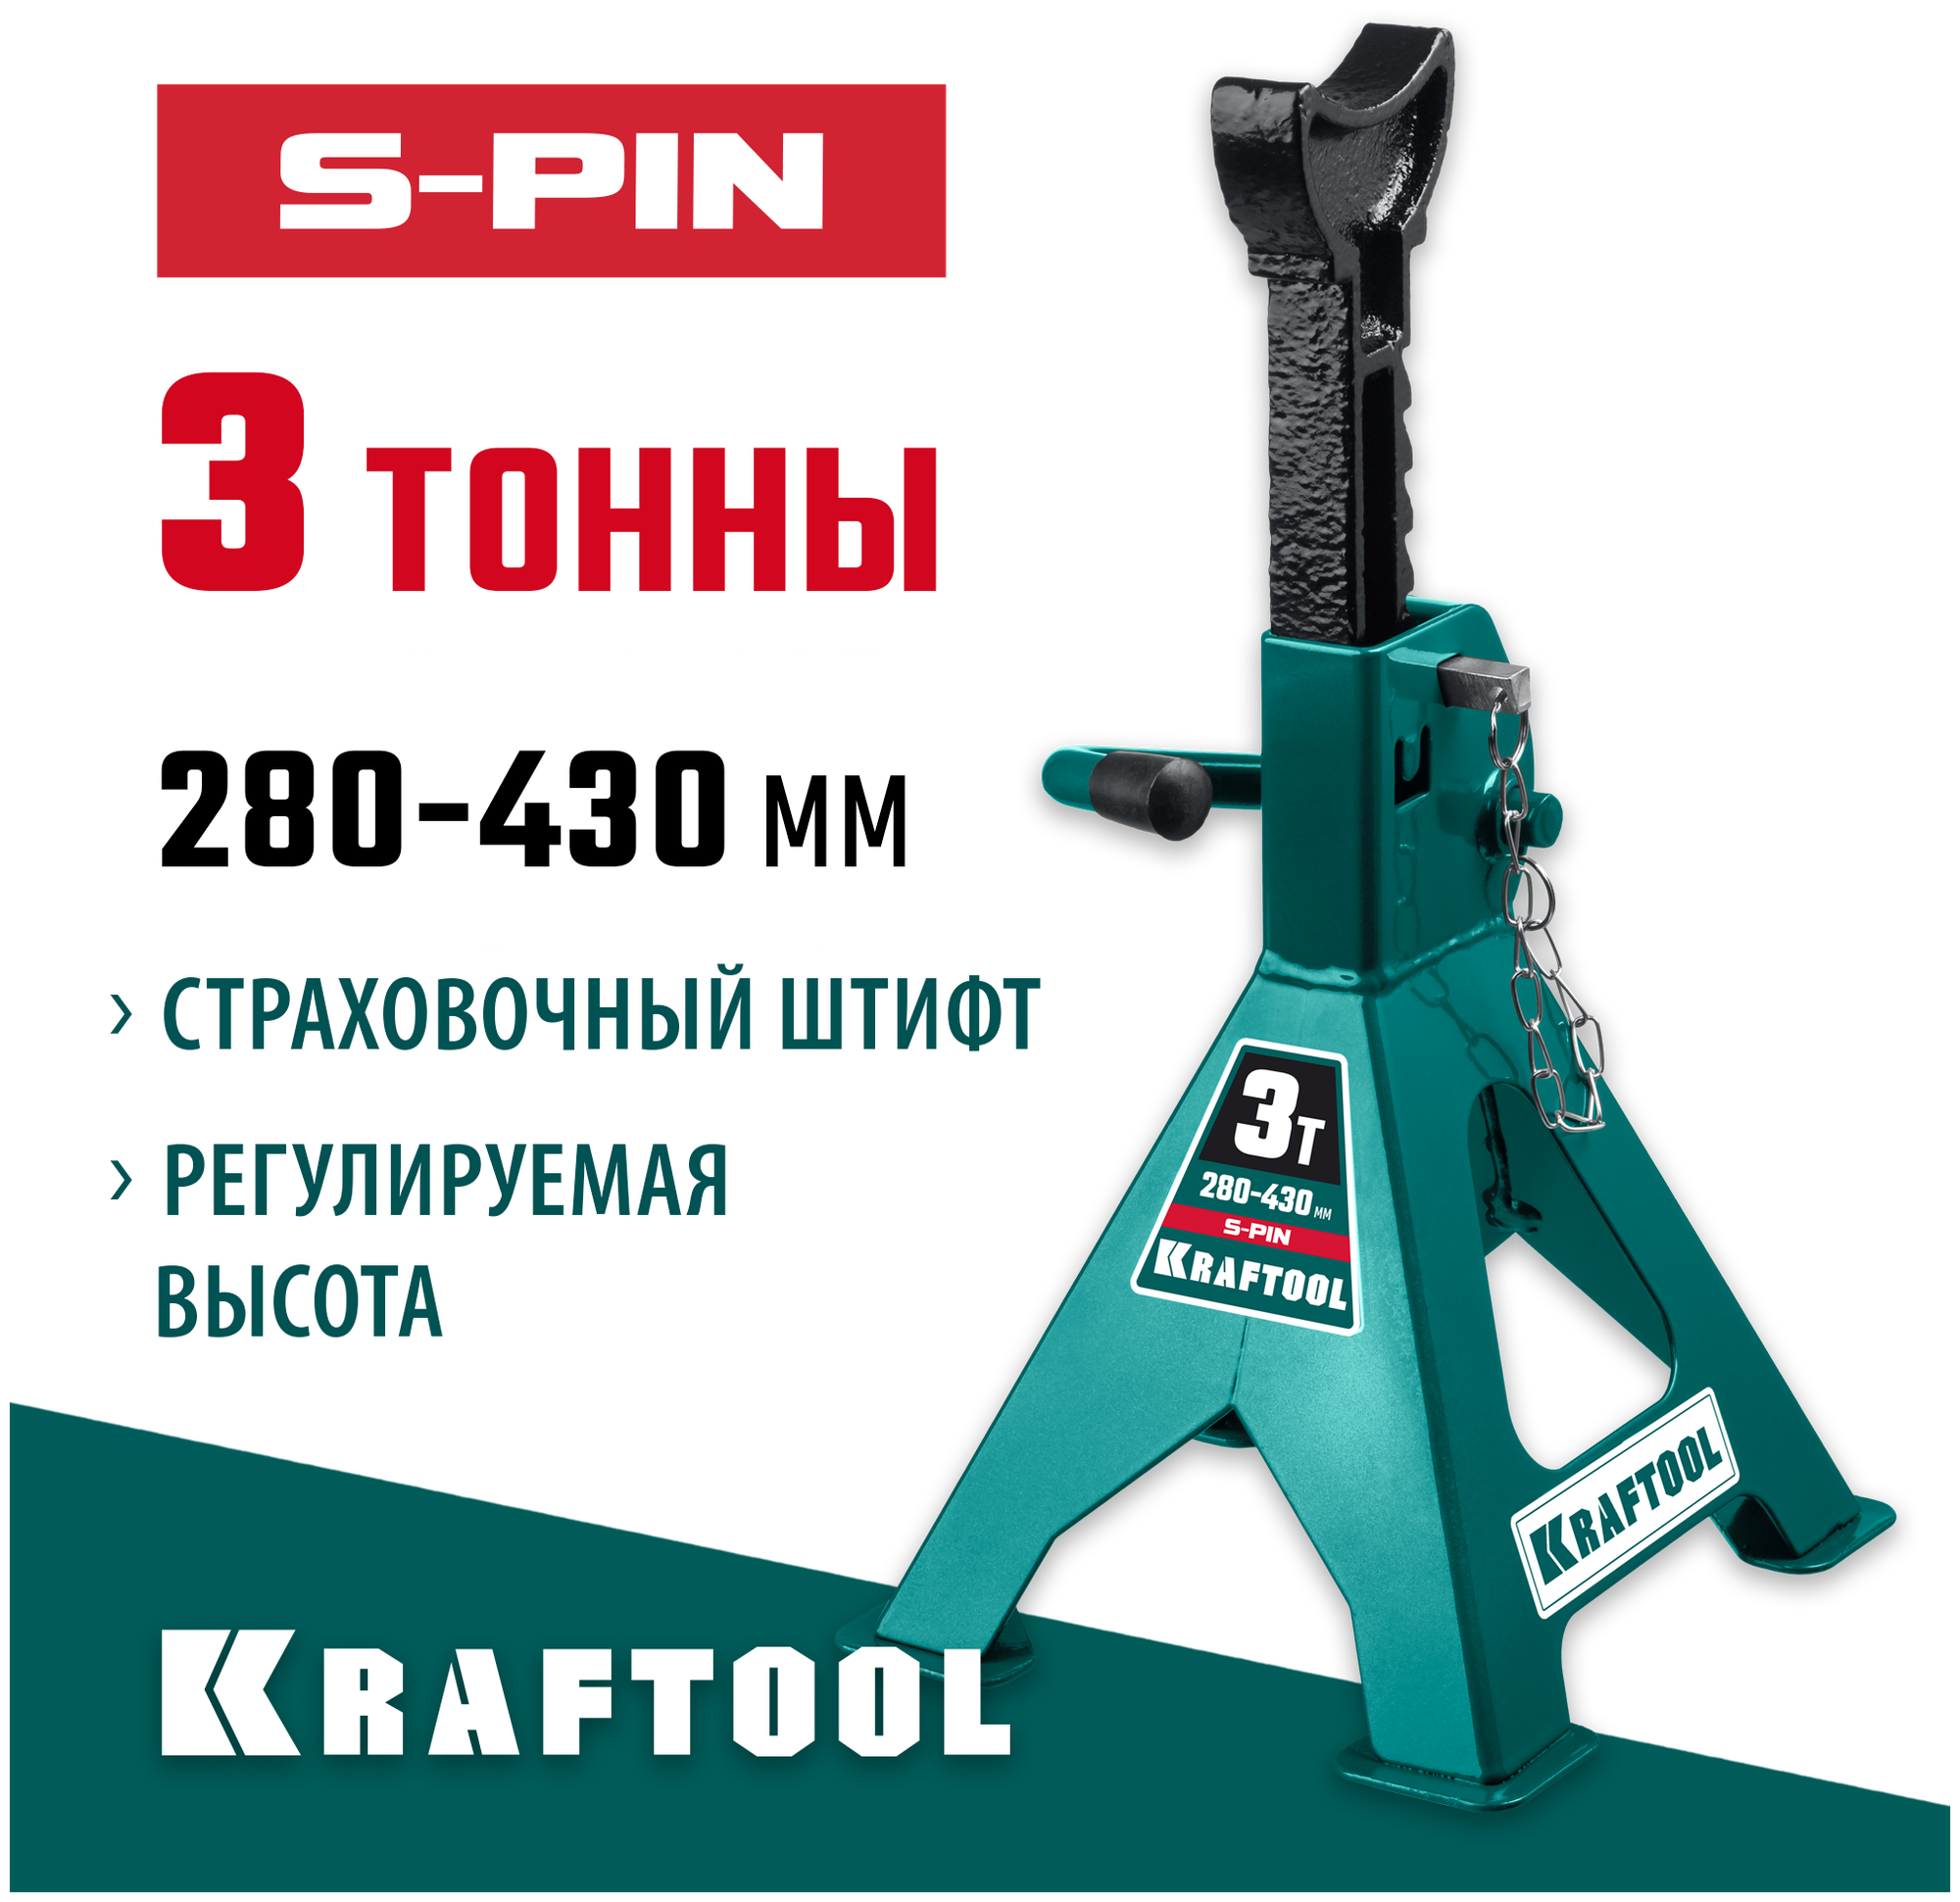 KRAFTOOL S-PIN, 3 т, 280 - 430 мм, усиленная страховочная подставка со штифтом (43465-3)